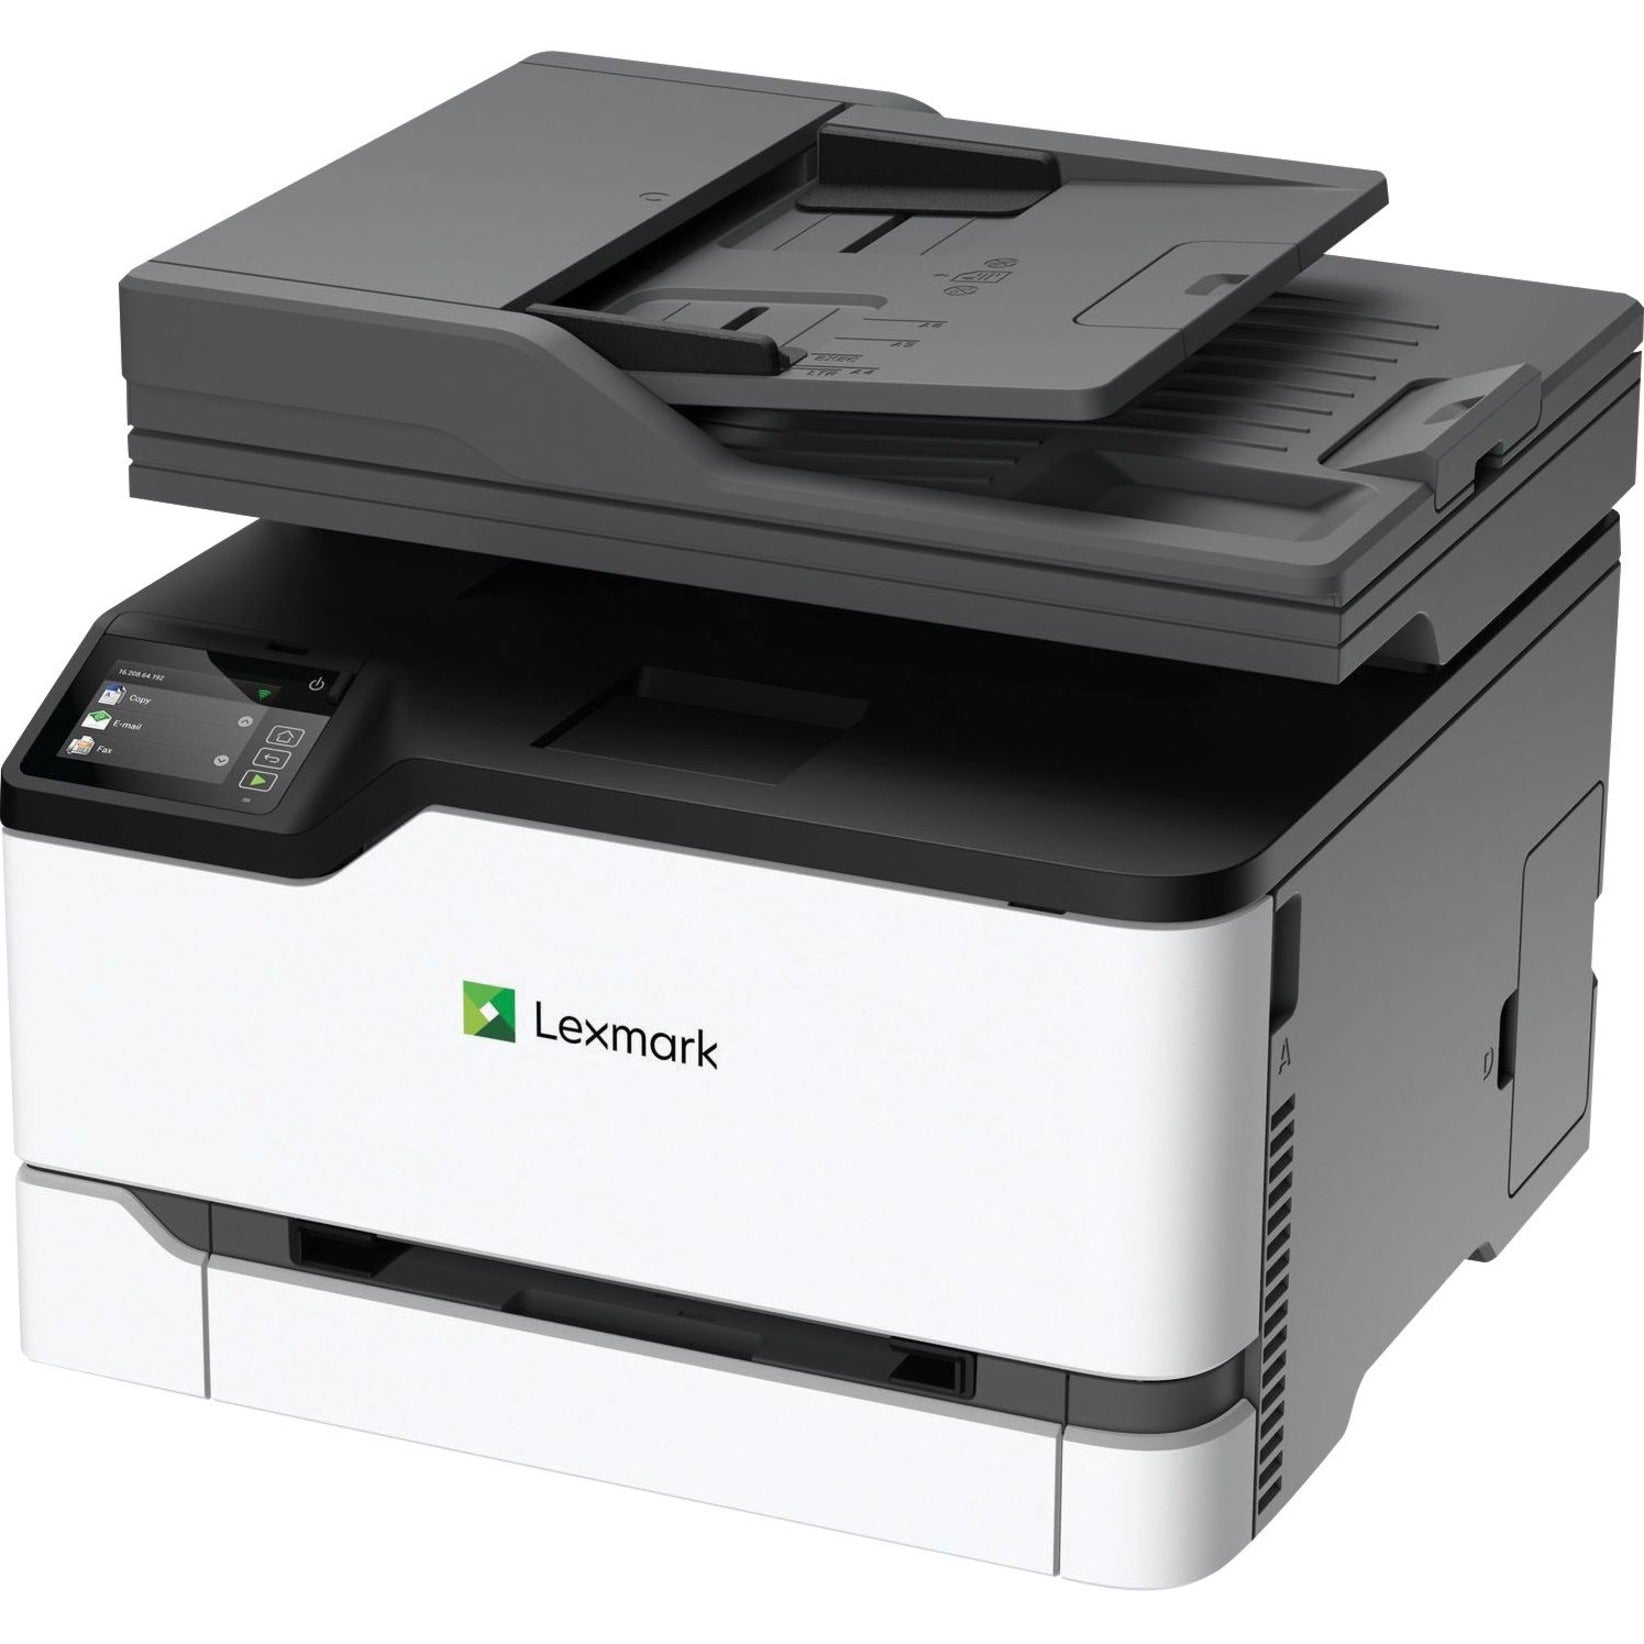 Lexmark 29S0355 MB3442I Laser Multifunction Printer, Monochrome, Plain Paper Print, 600 x 600 dpi